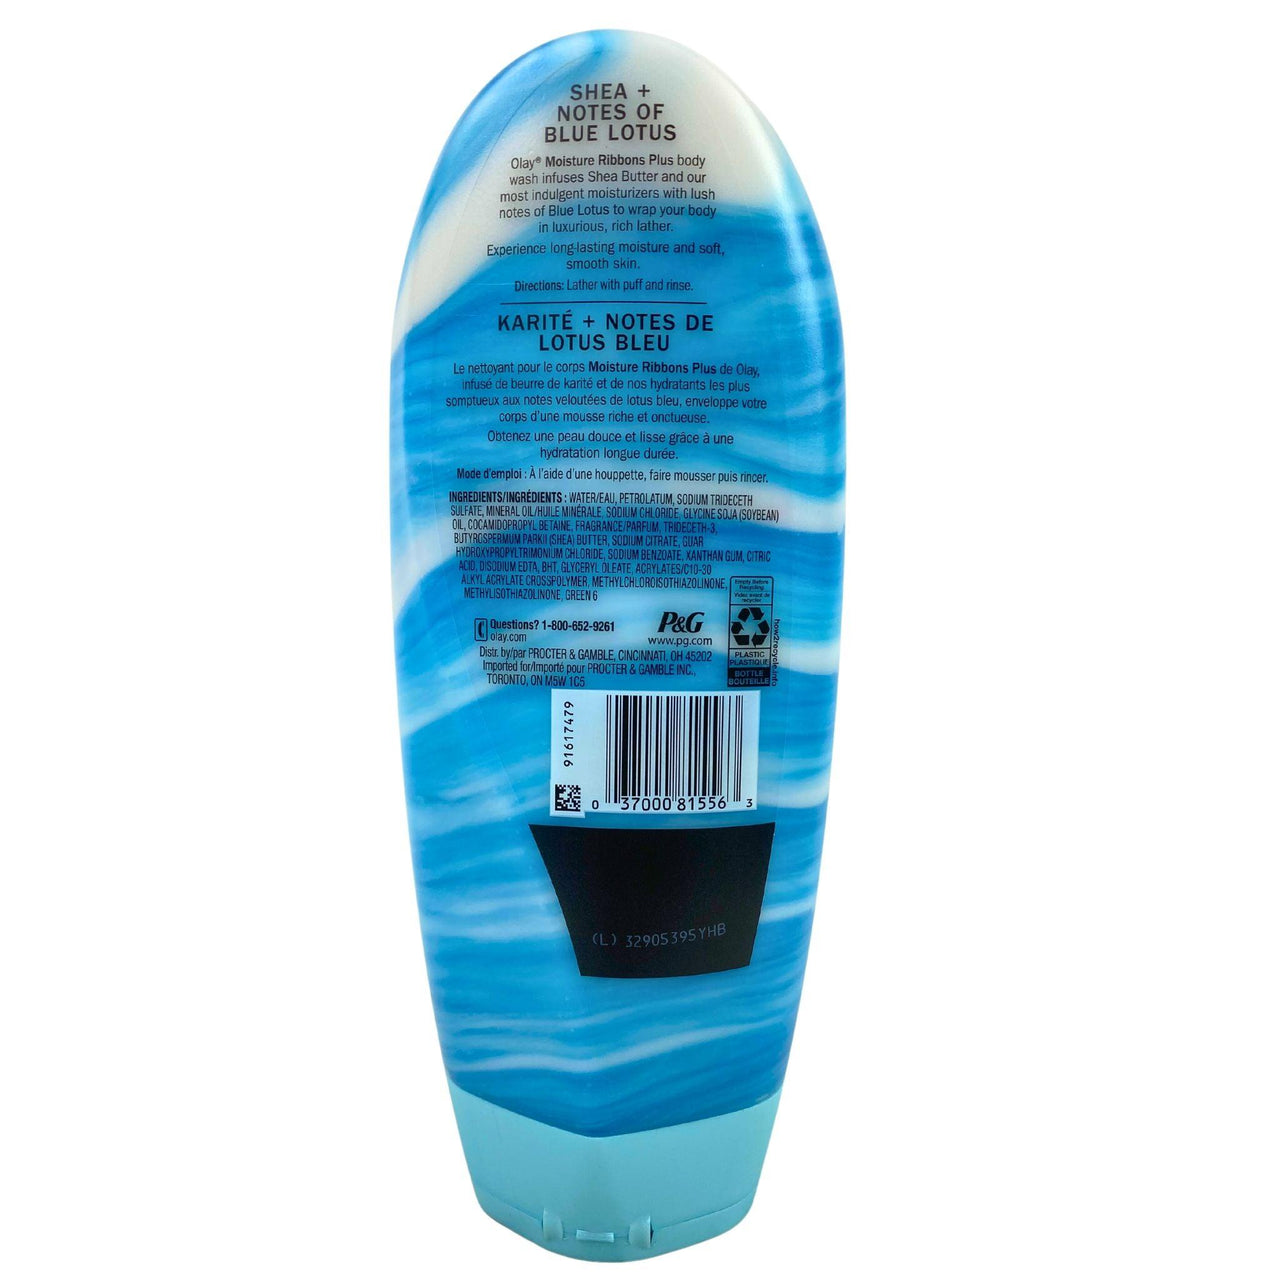 Olay Moisture Ribbons Plus Shea + Notes of Blue Lotus Indulgent Body Wash 18OZ (40 Pcs Lot) - Discount Wholesalers Inc